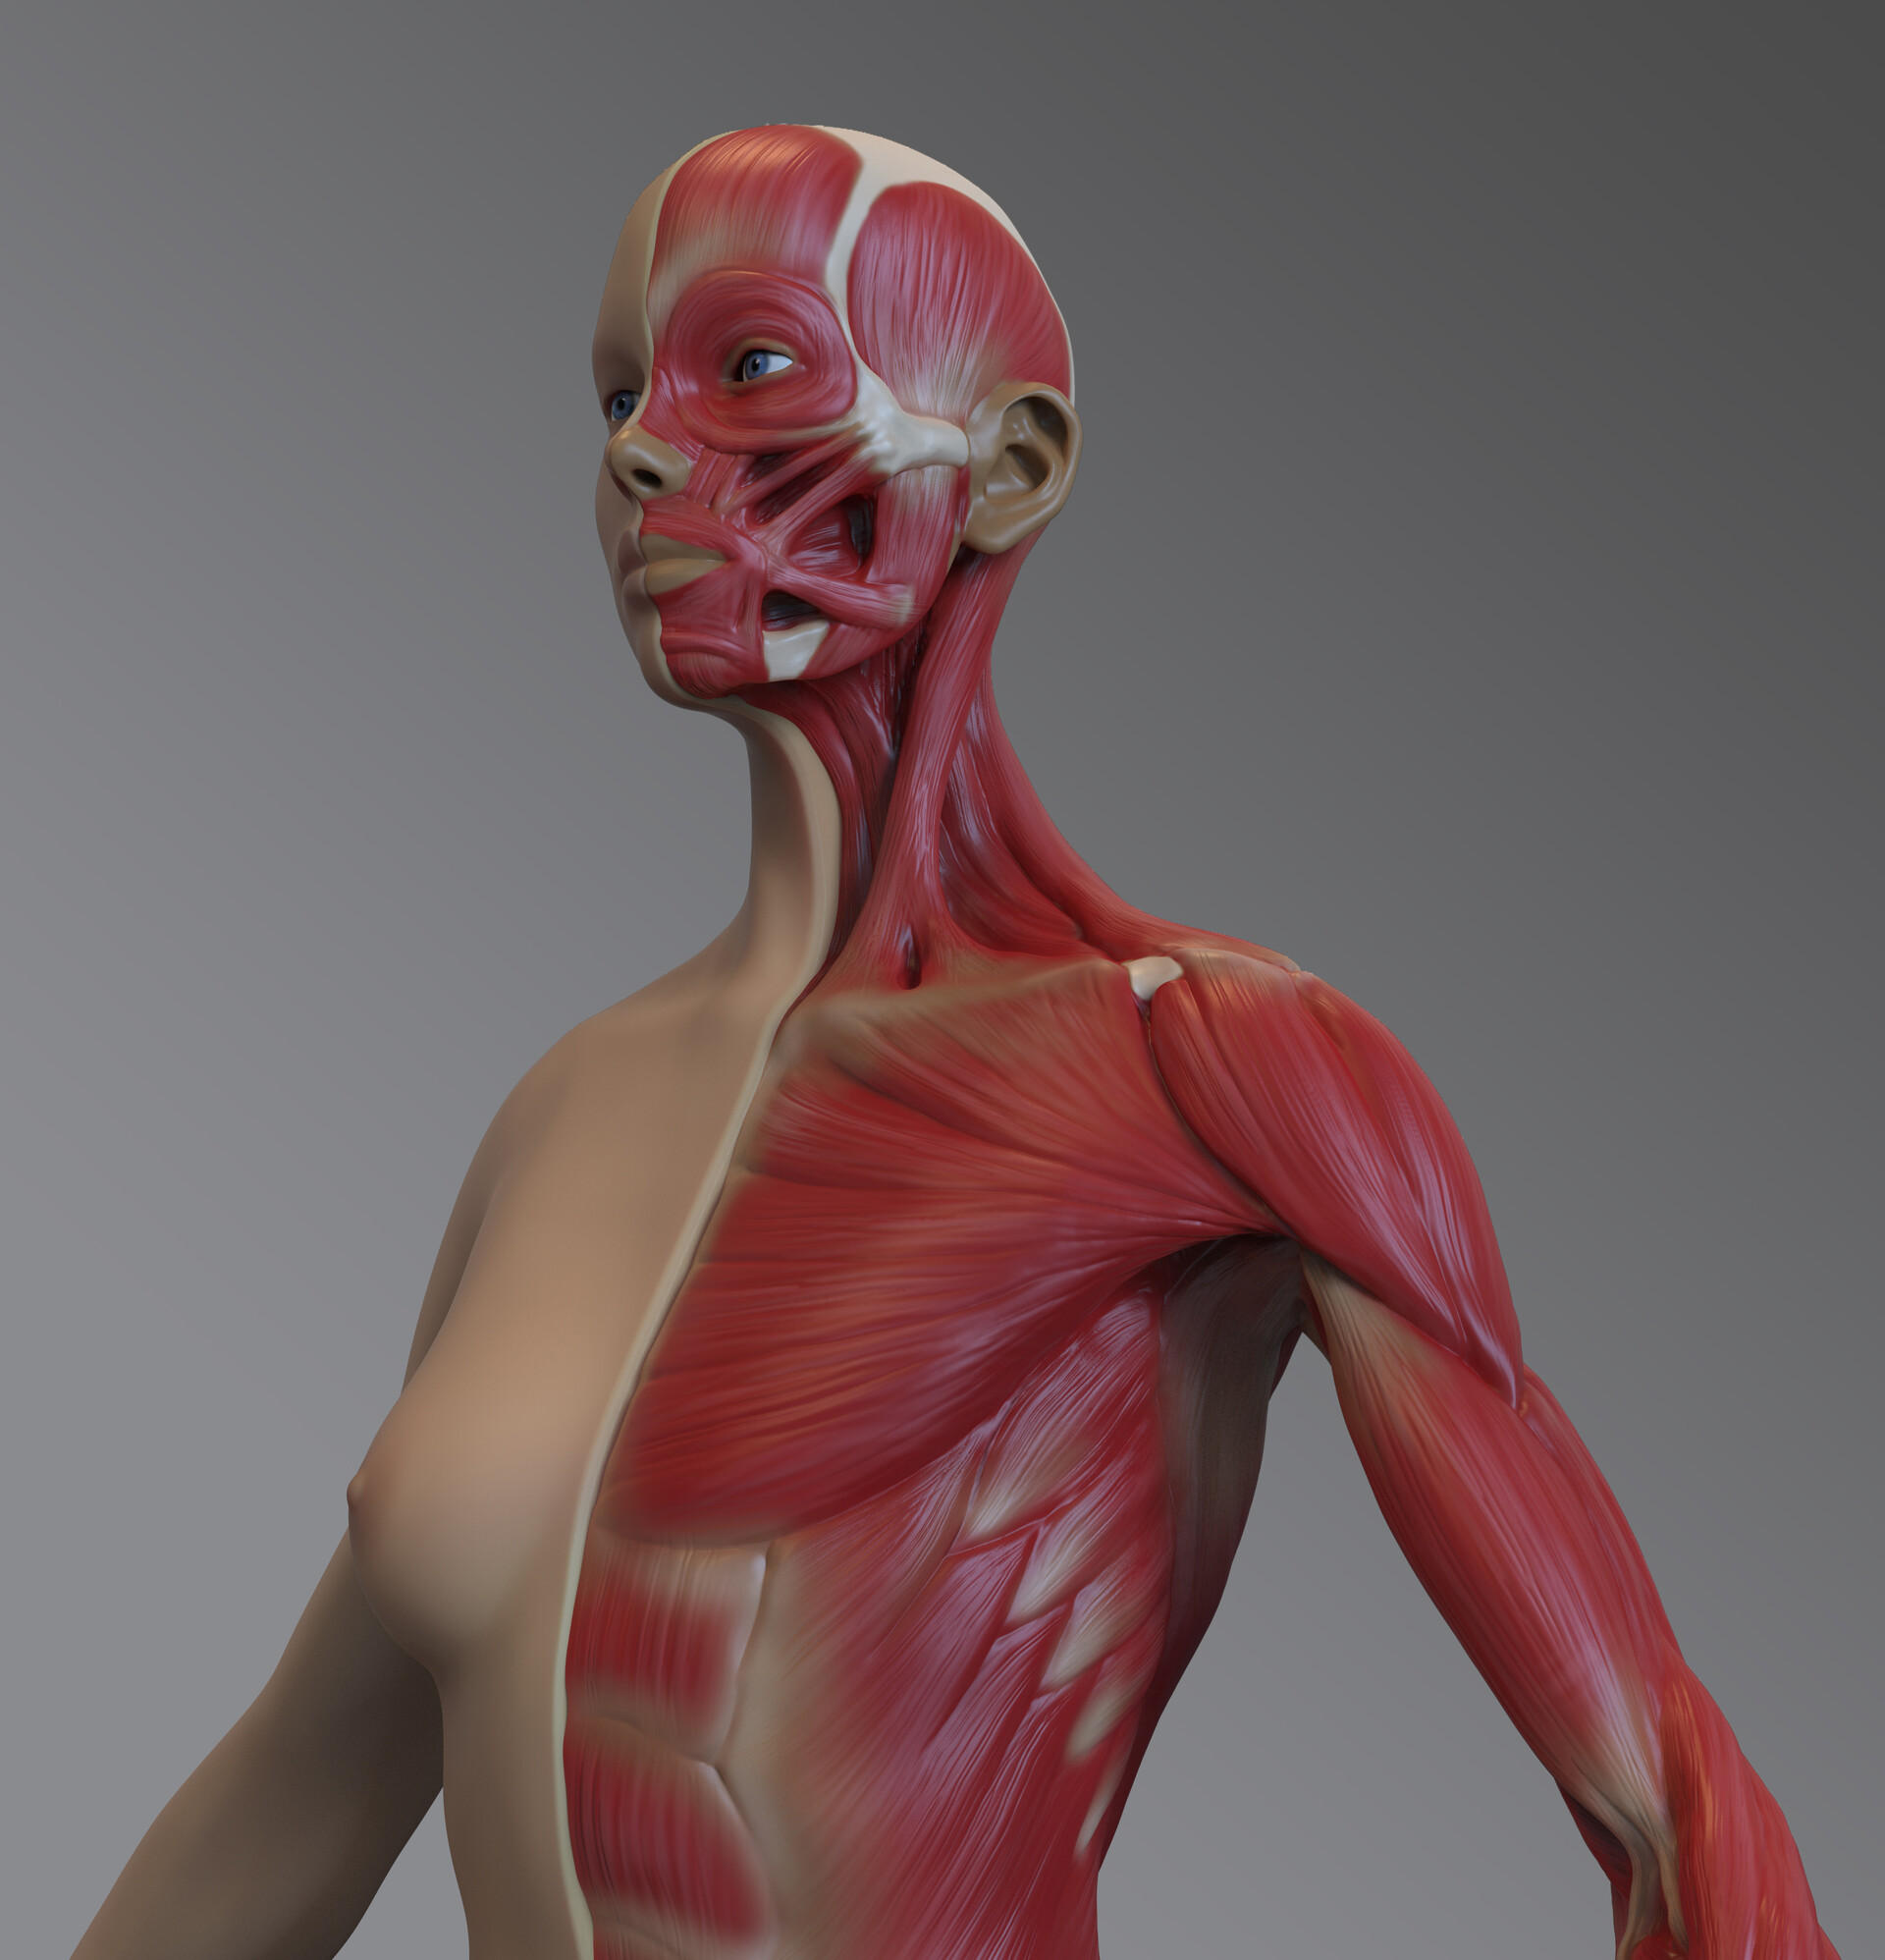 ArtStation - Female Muscular Anatomy - Model, Cameron Bye